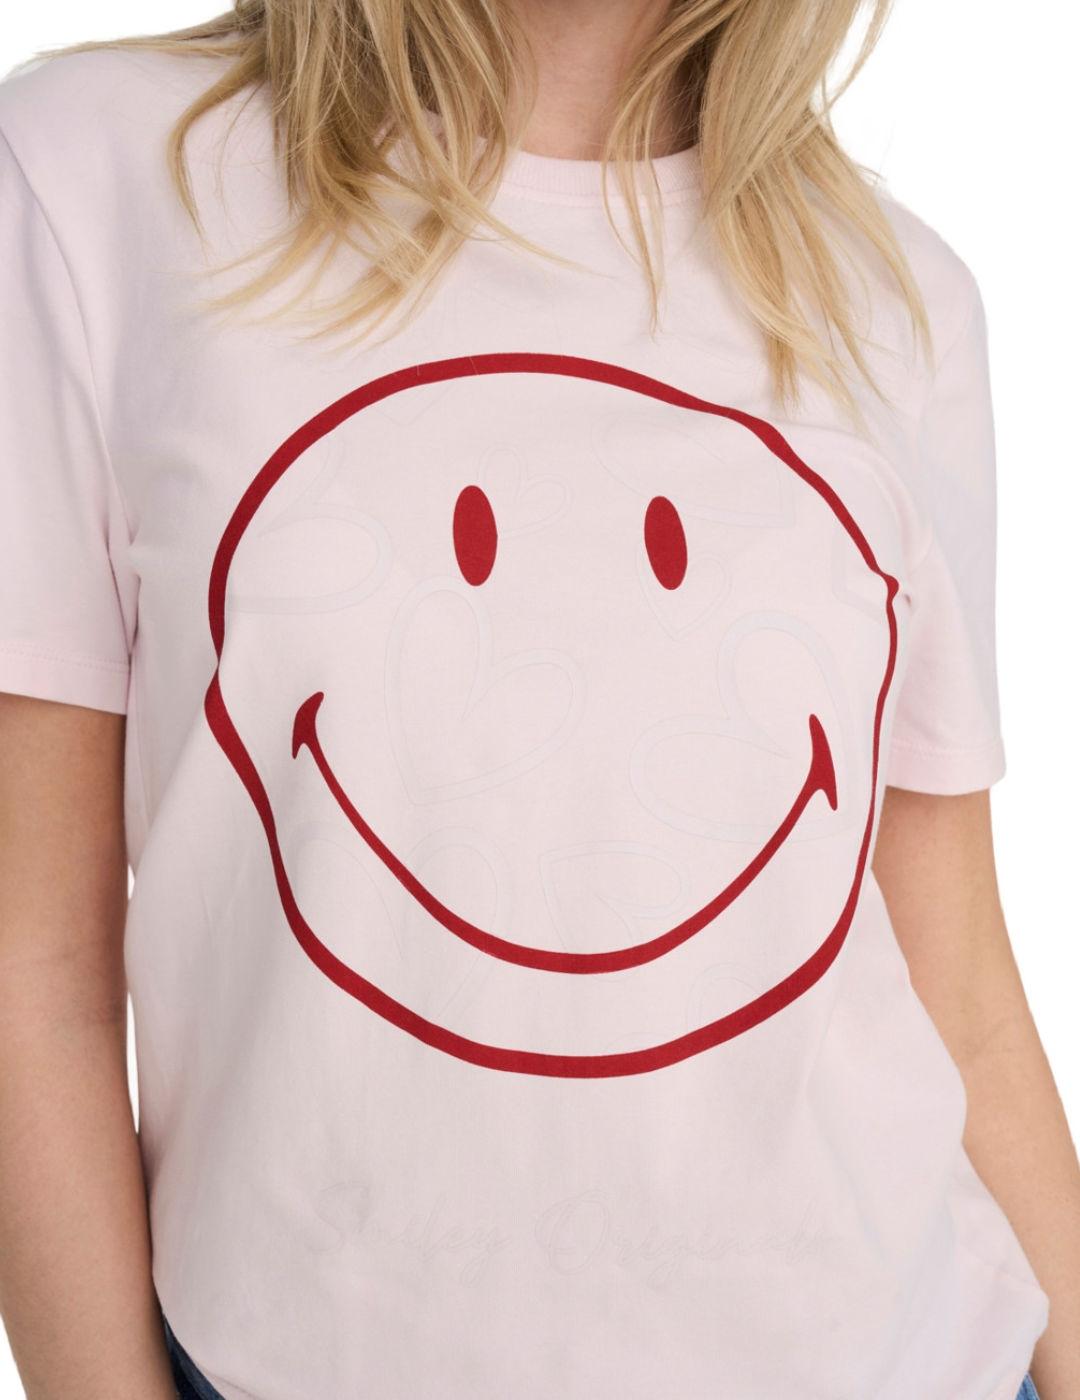 Camiseta Only Smiley rosa palo manga corta para mujer